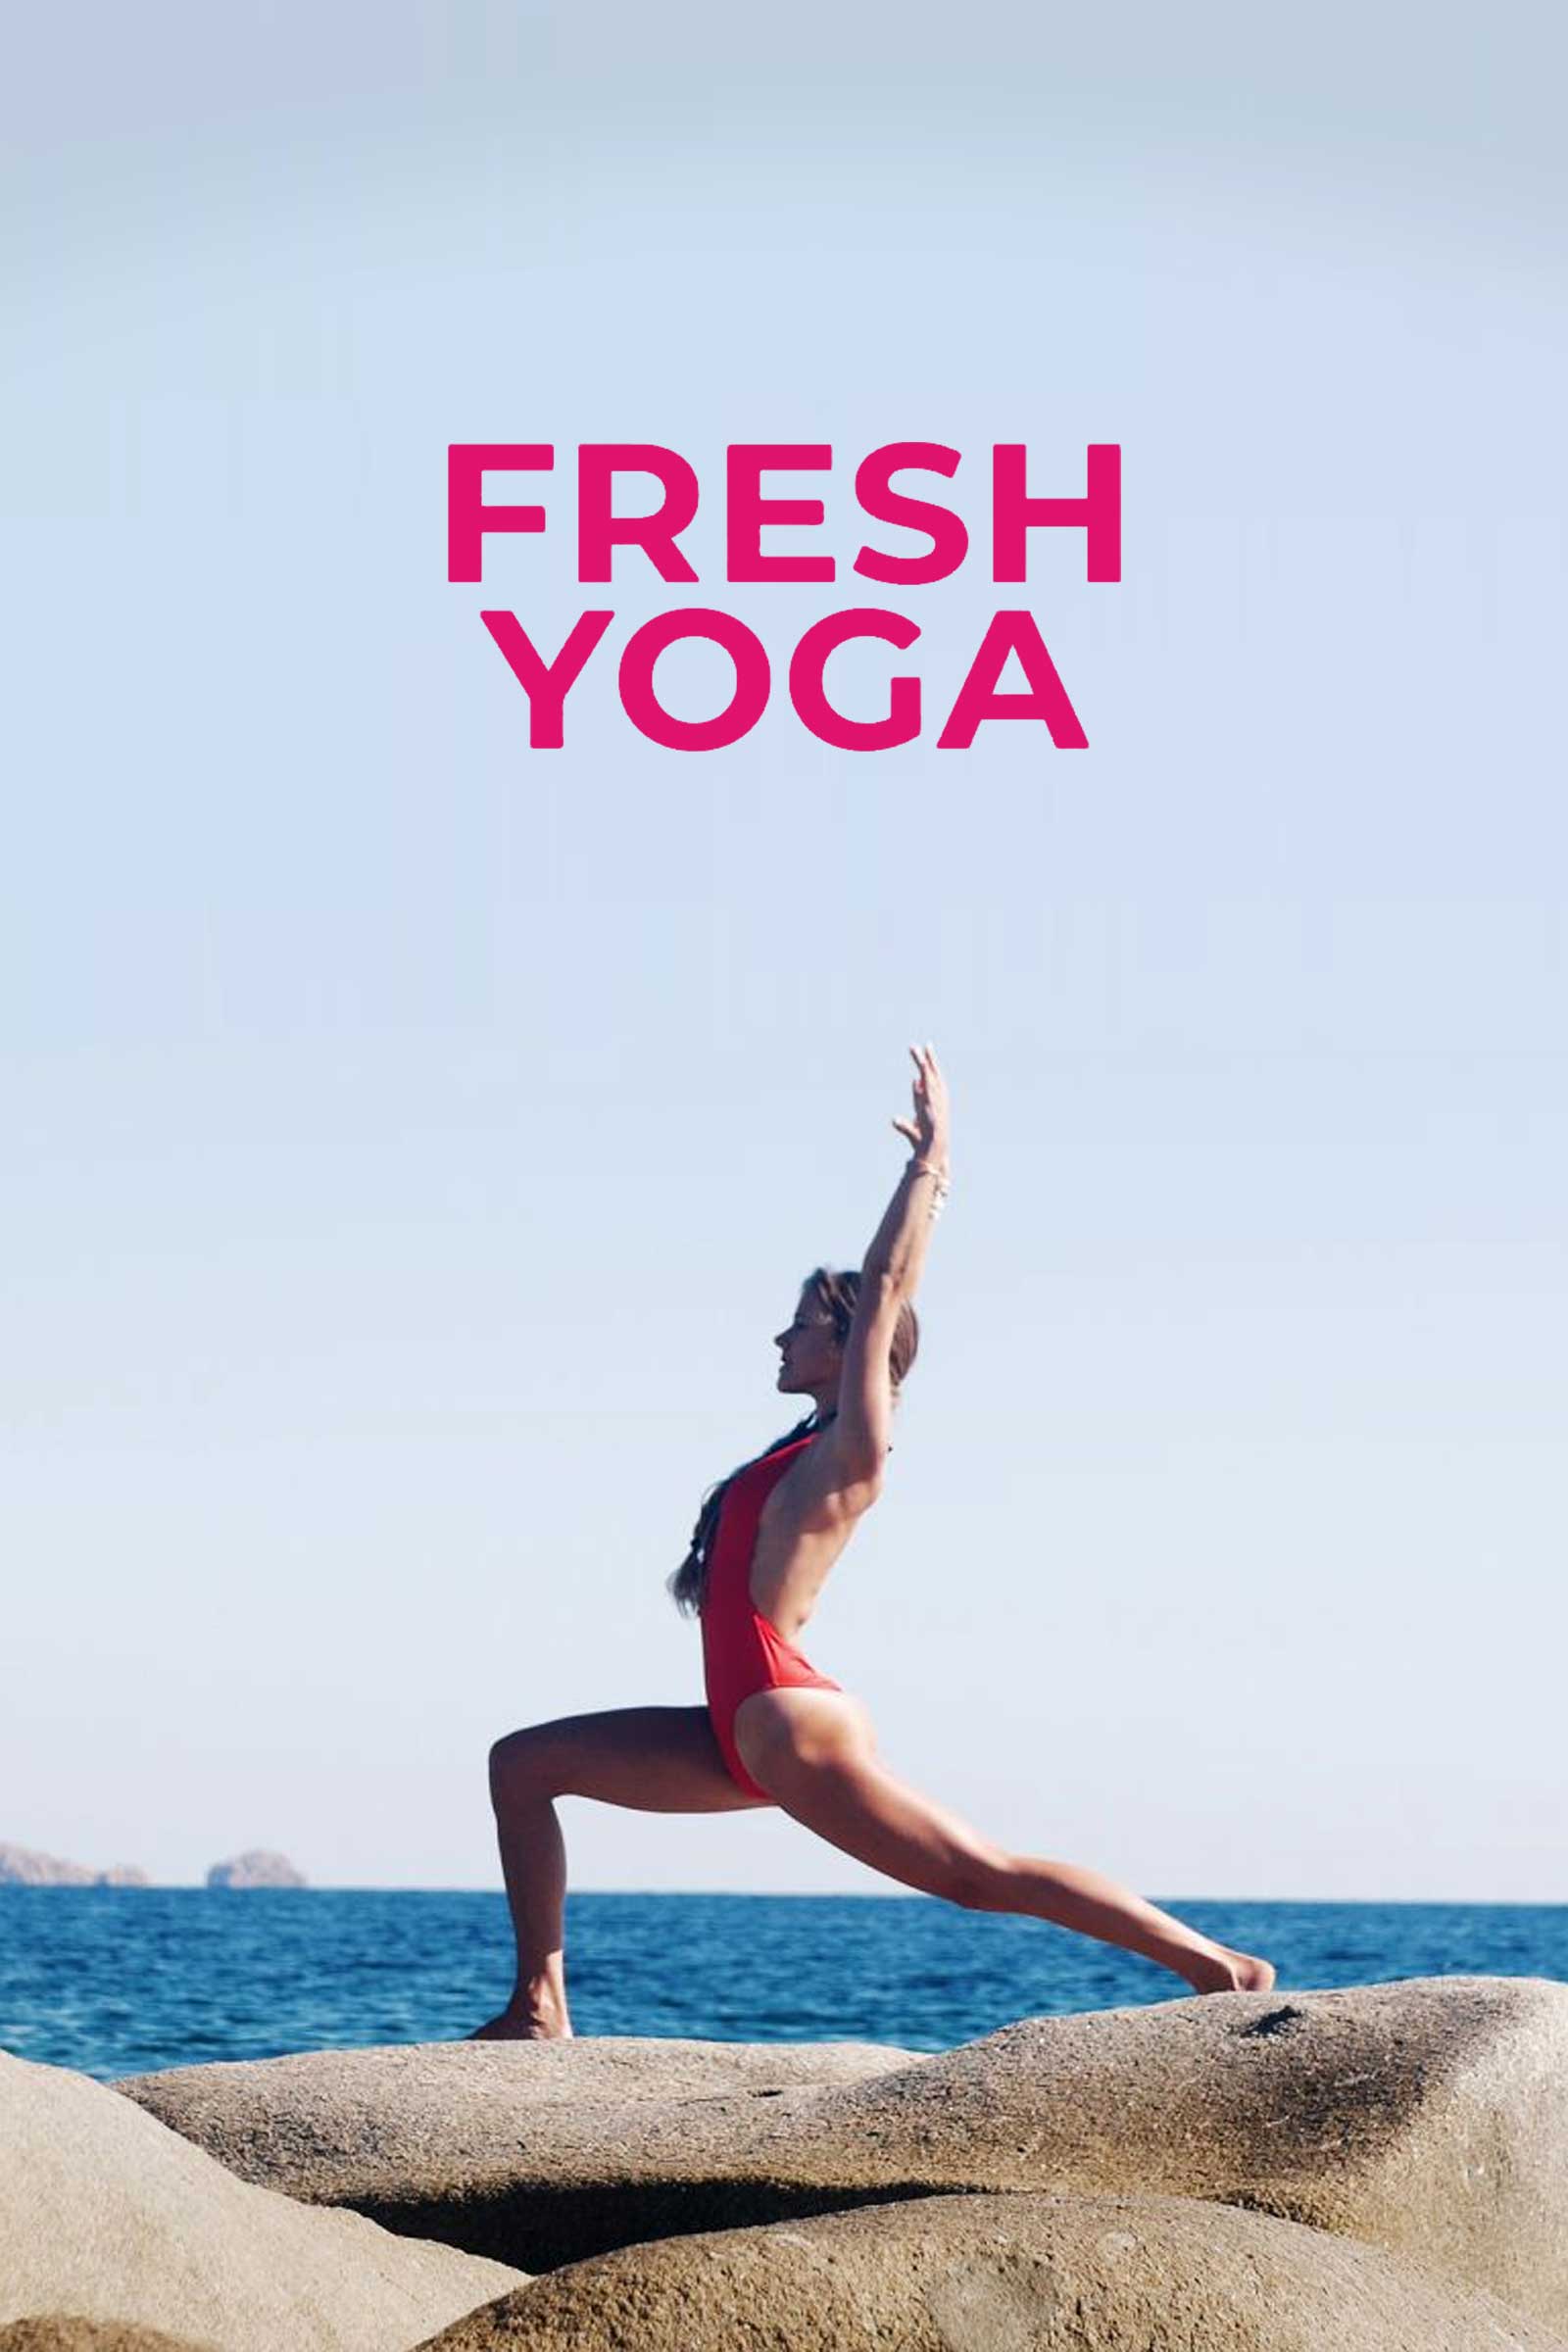 Where to stream Fresh Yoga with Katy Misson